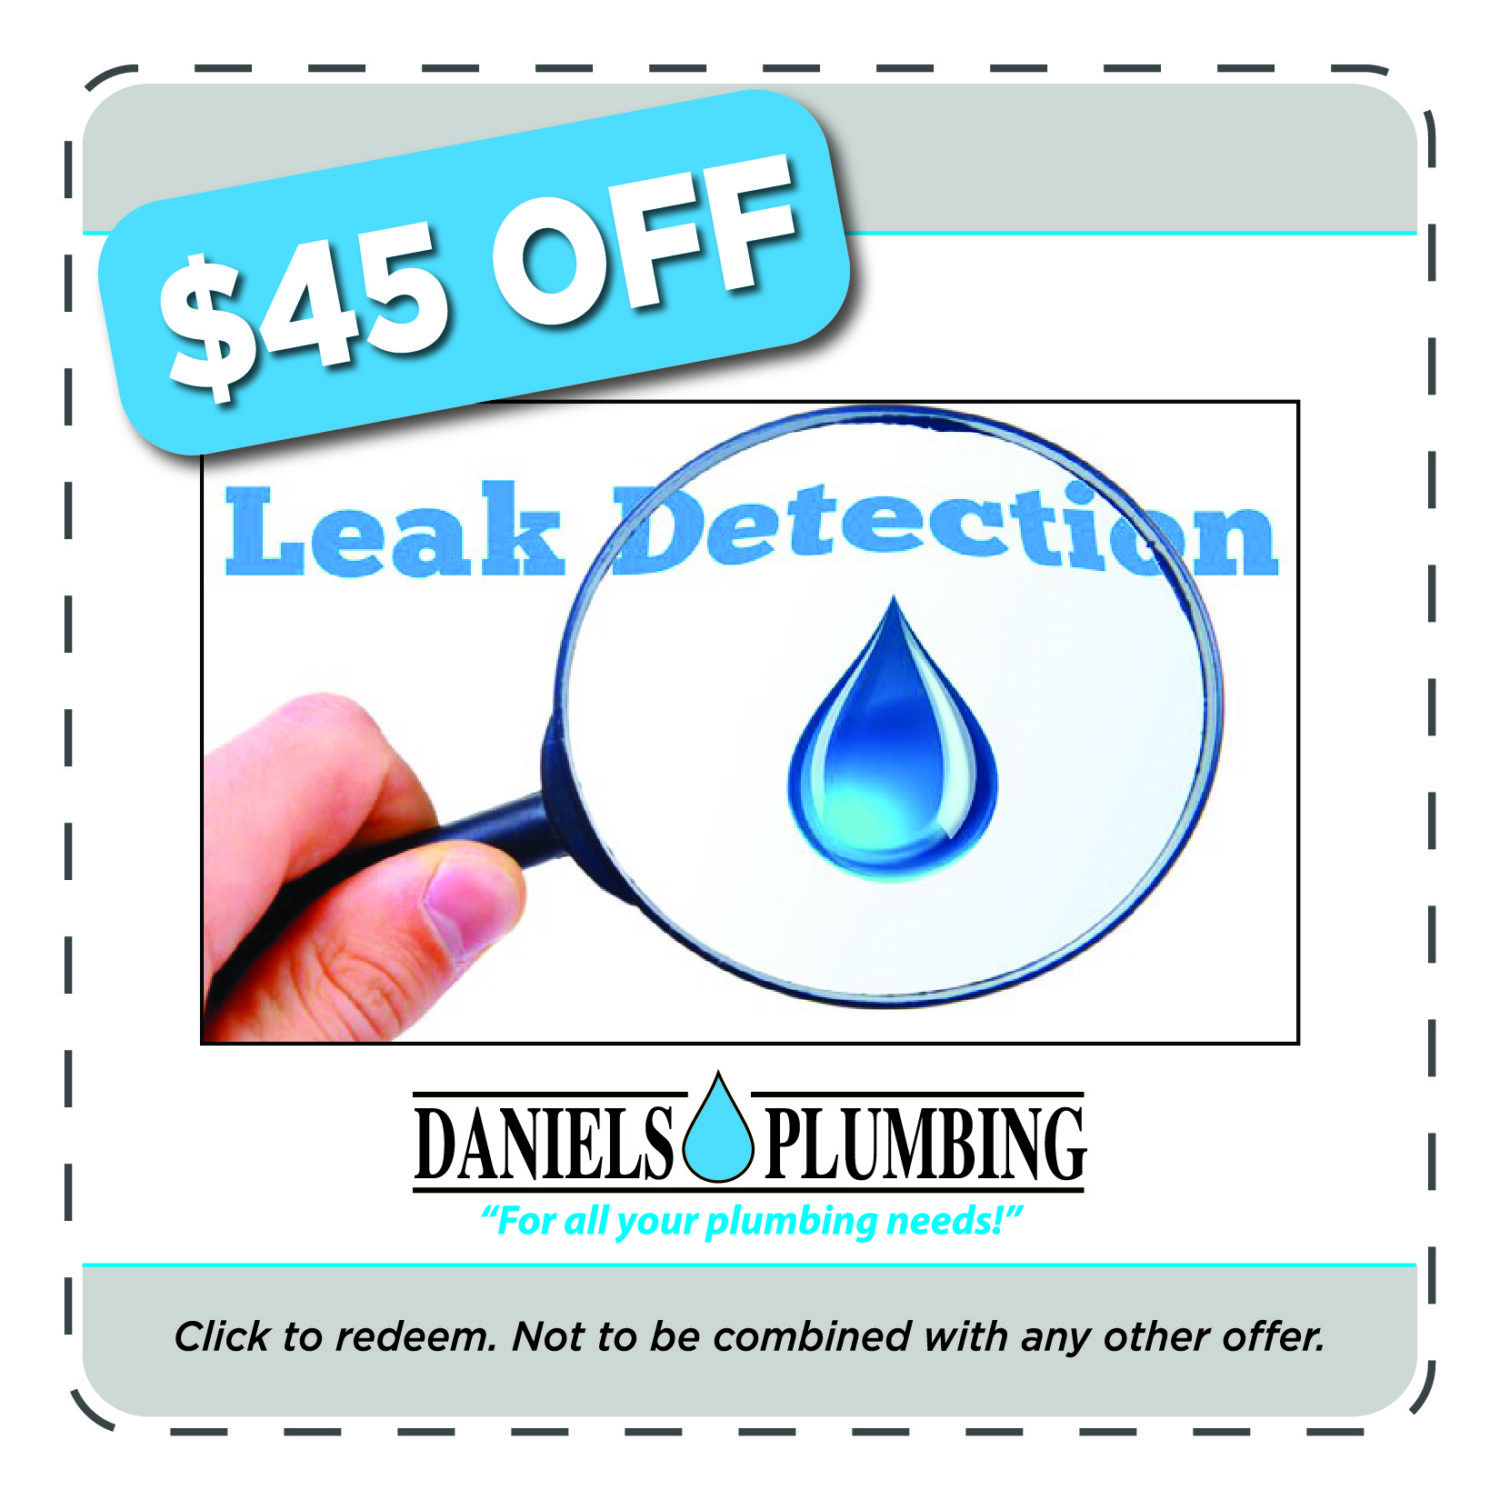 24-2 0309 Daniel's Plumbing Coupons - Leak Protection $45 off FINAL-01